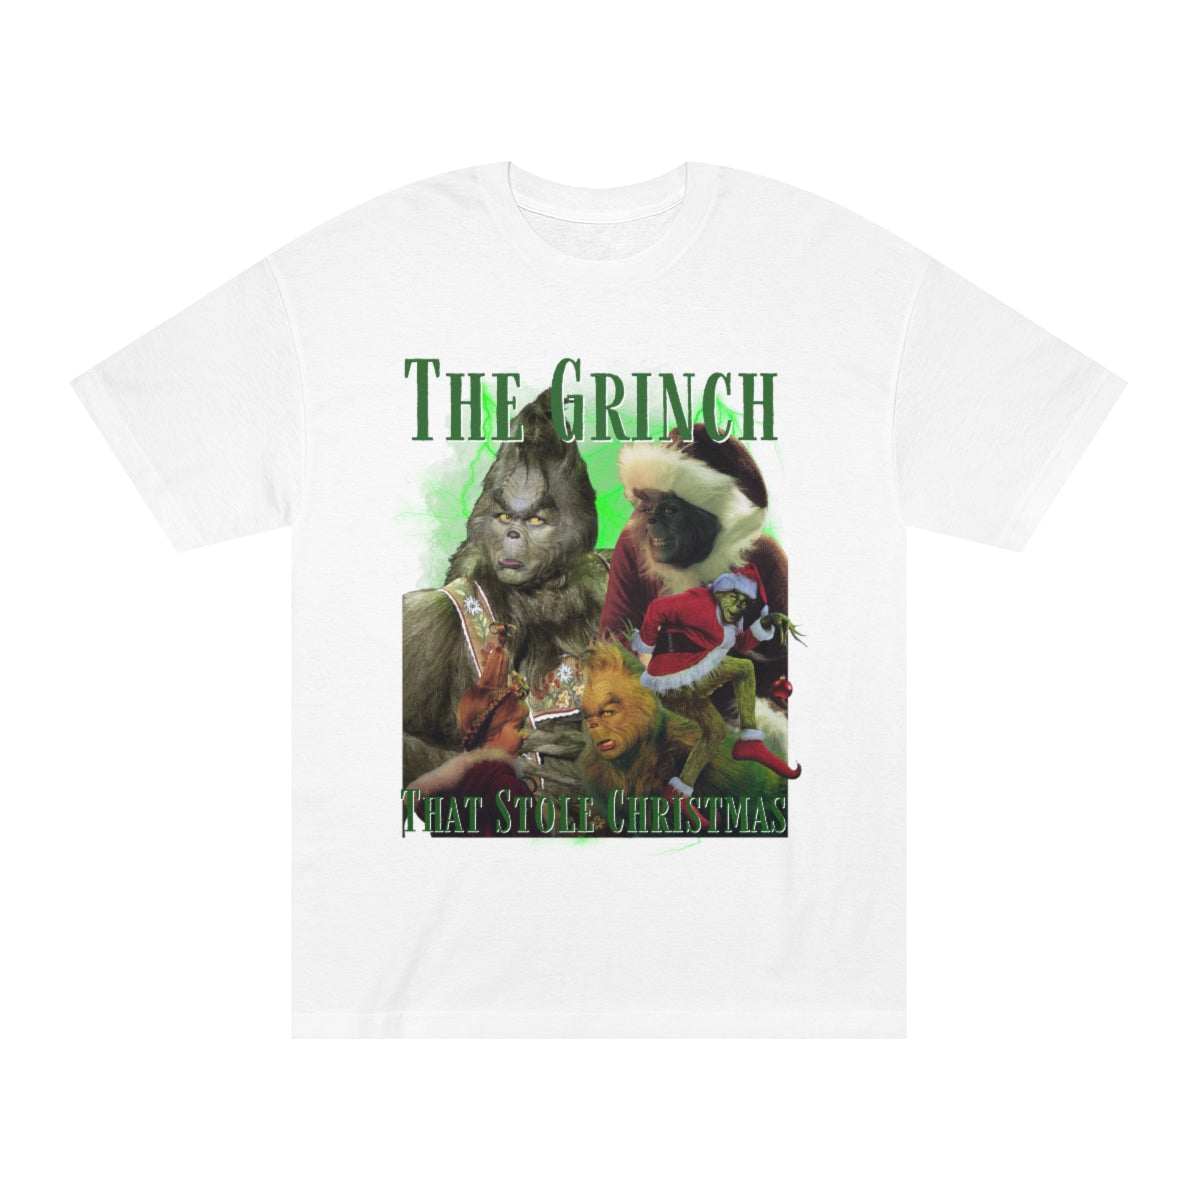 The Grinch Vintage Shirt, Jim Carrey Retro Shirt, Christmas Bootleg Shirt, 90s Vintage Graphic Christmas Tee